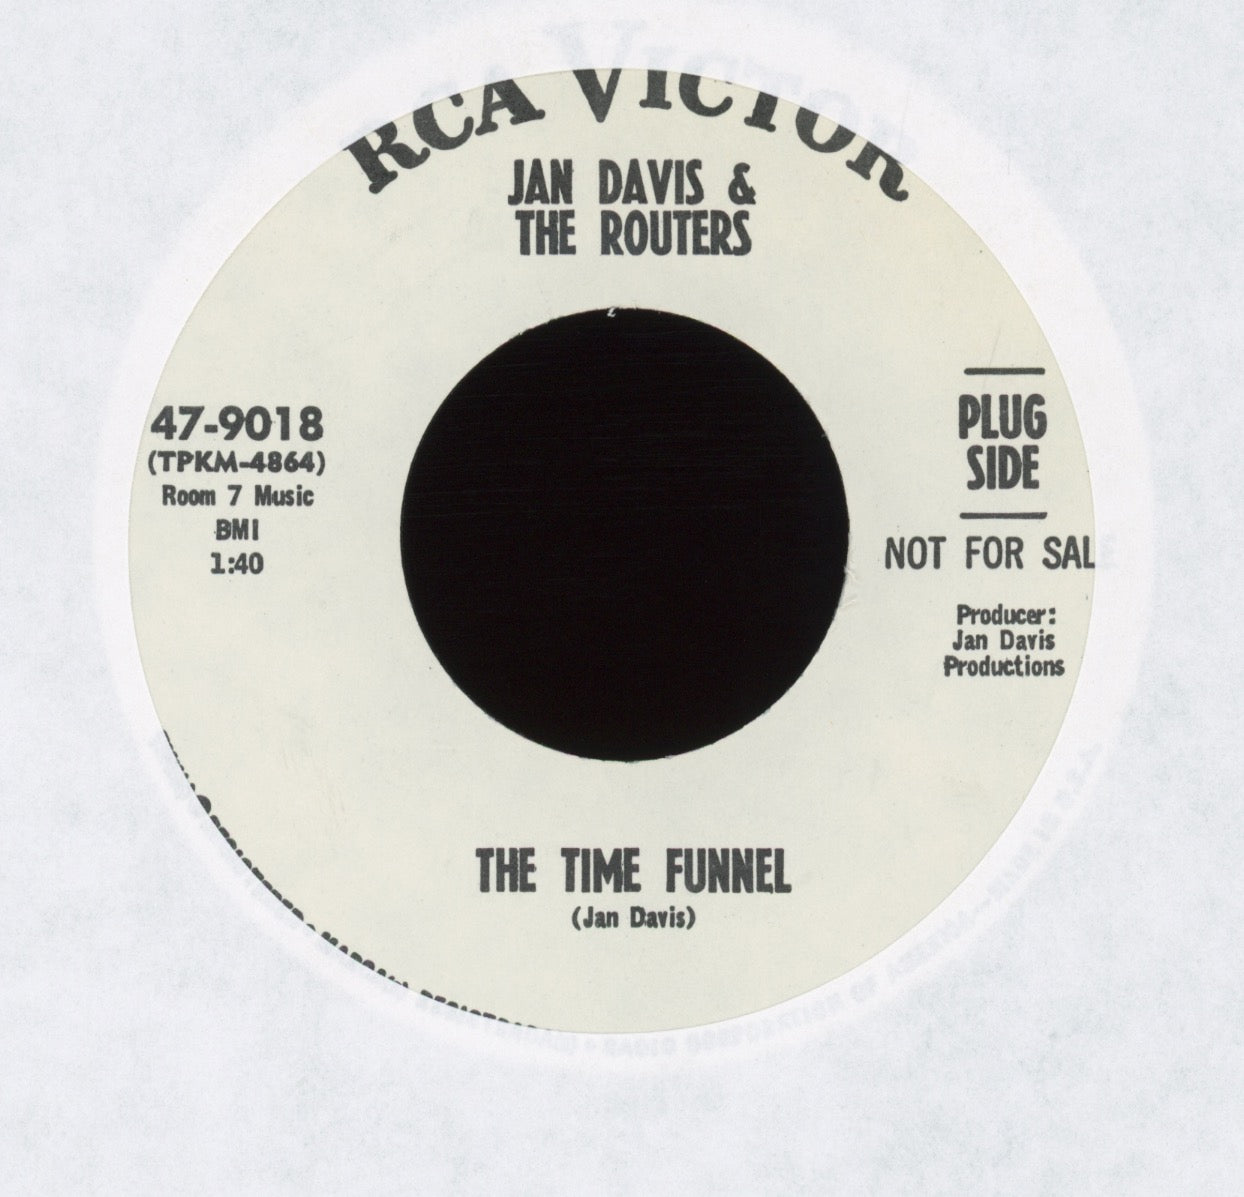 Jan Davis - The Time Funnel on RCA Promo Surf 45